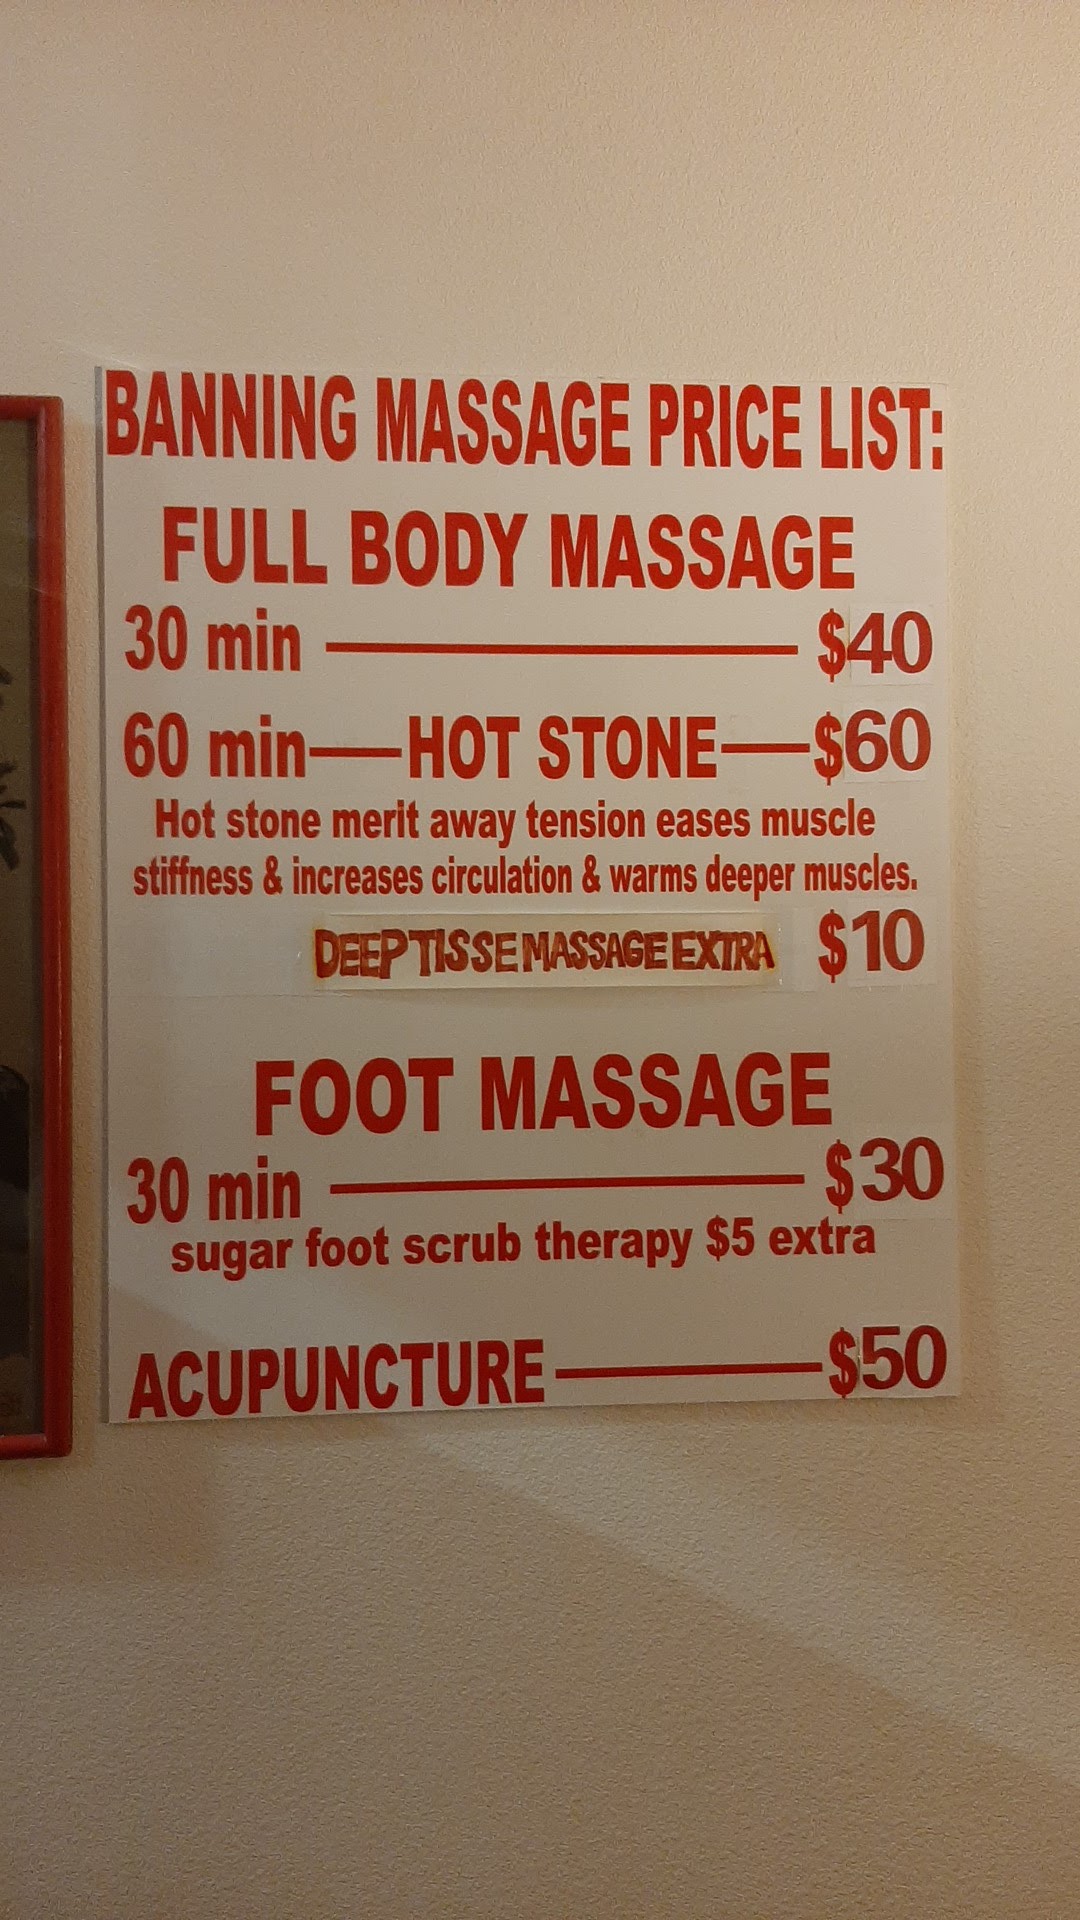 Banning Massage